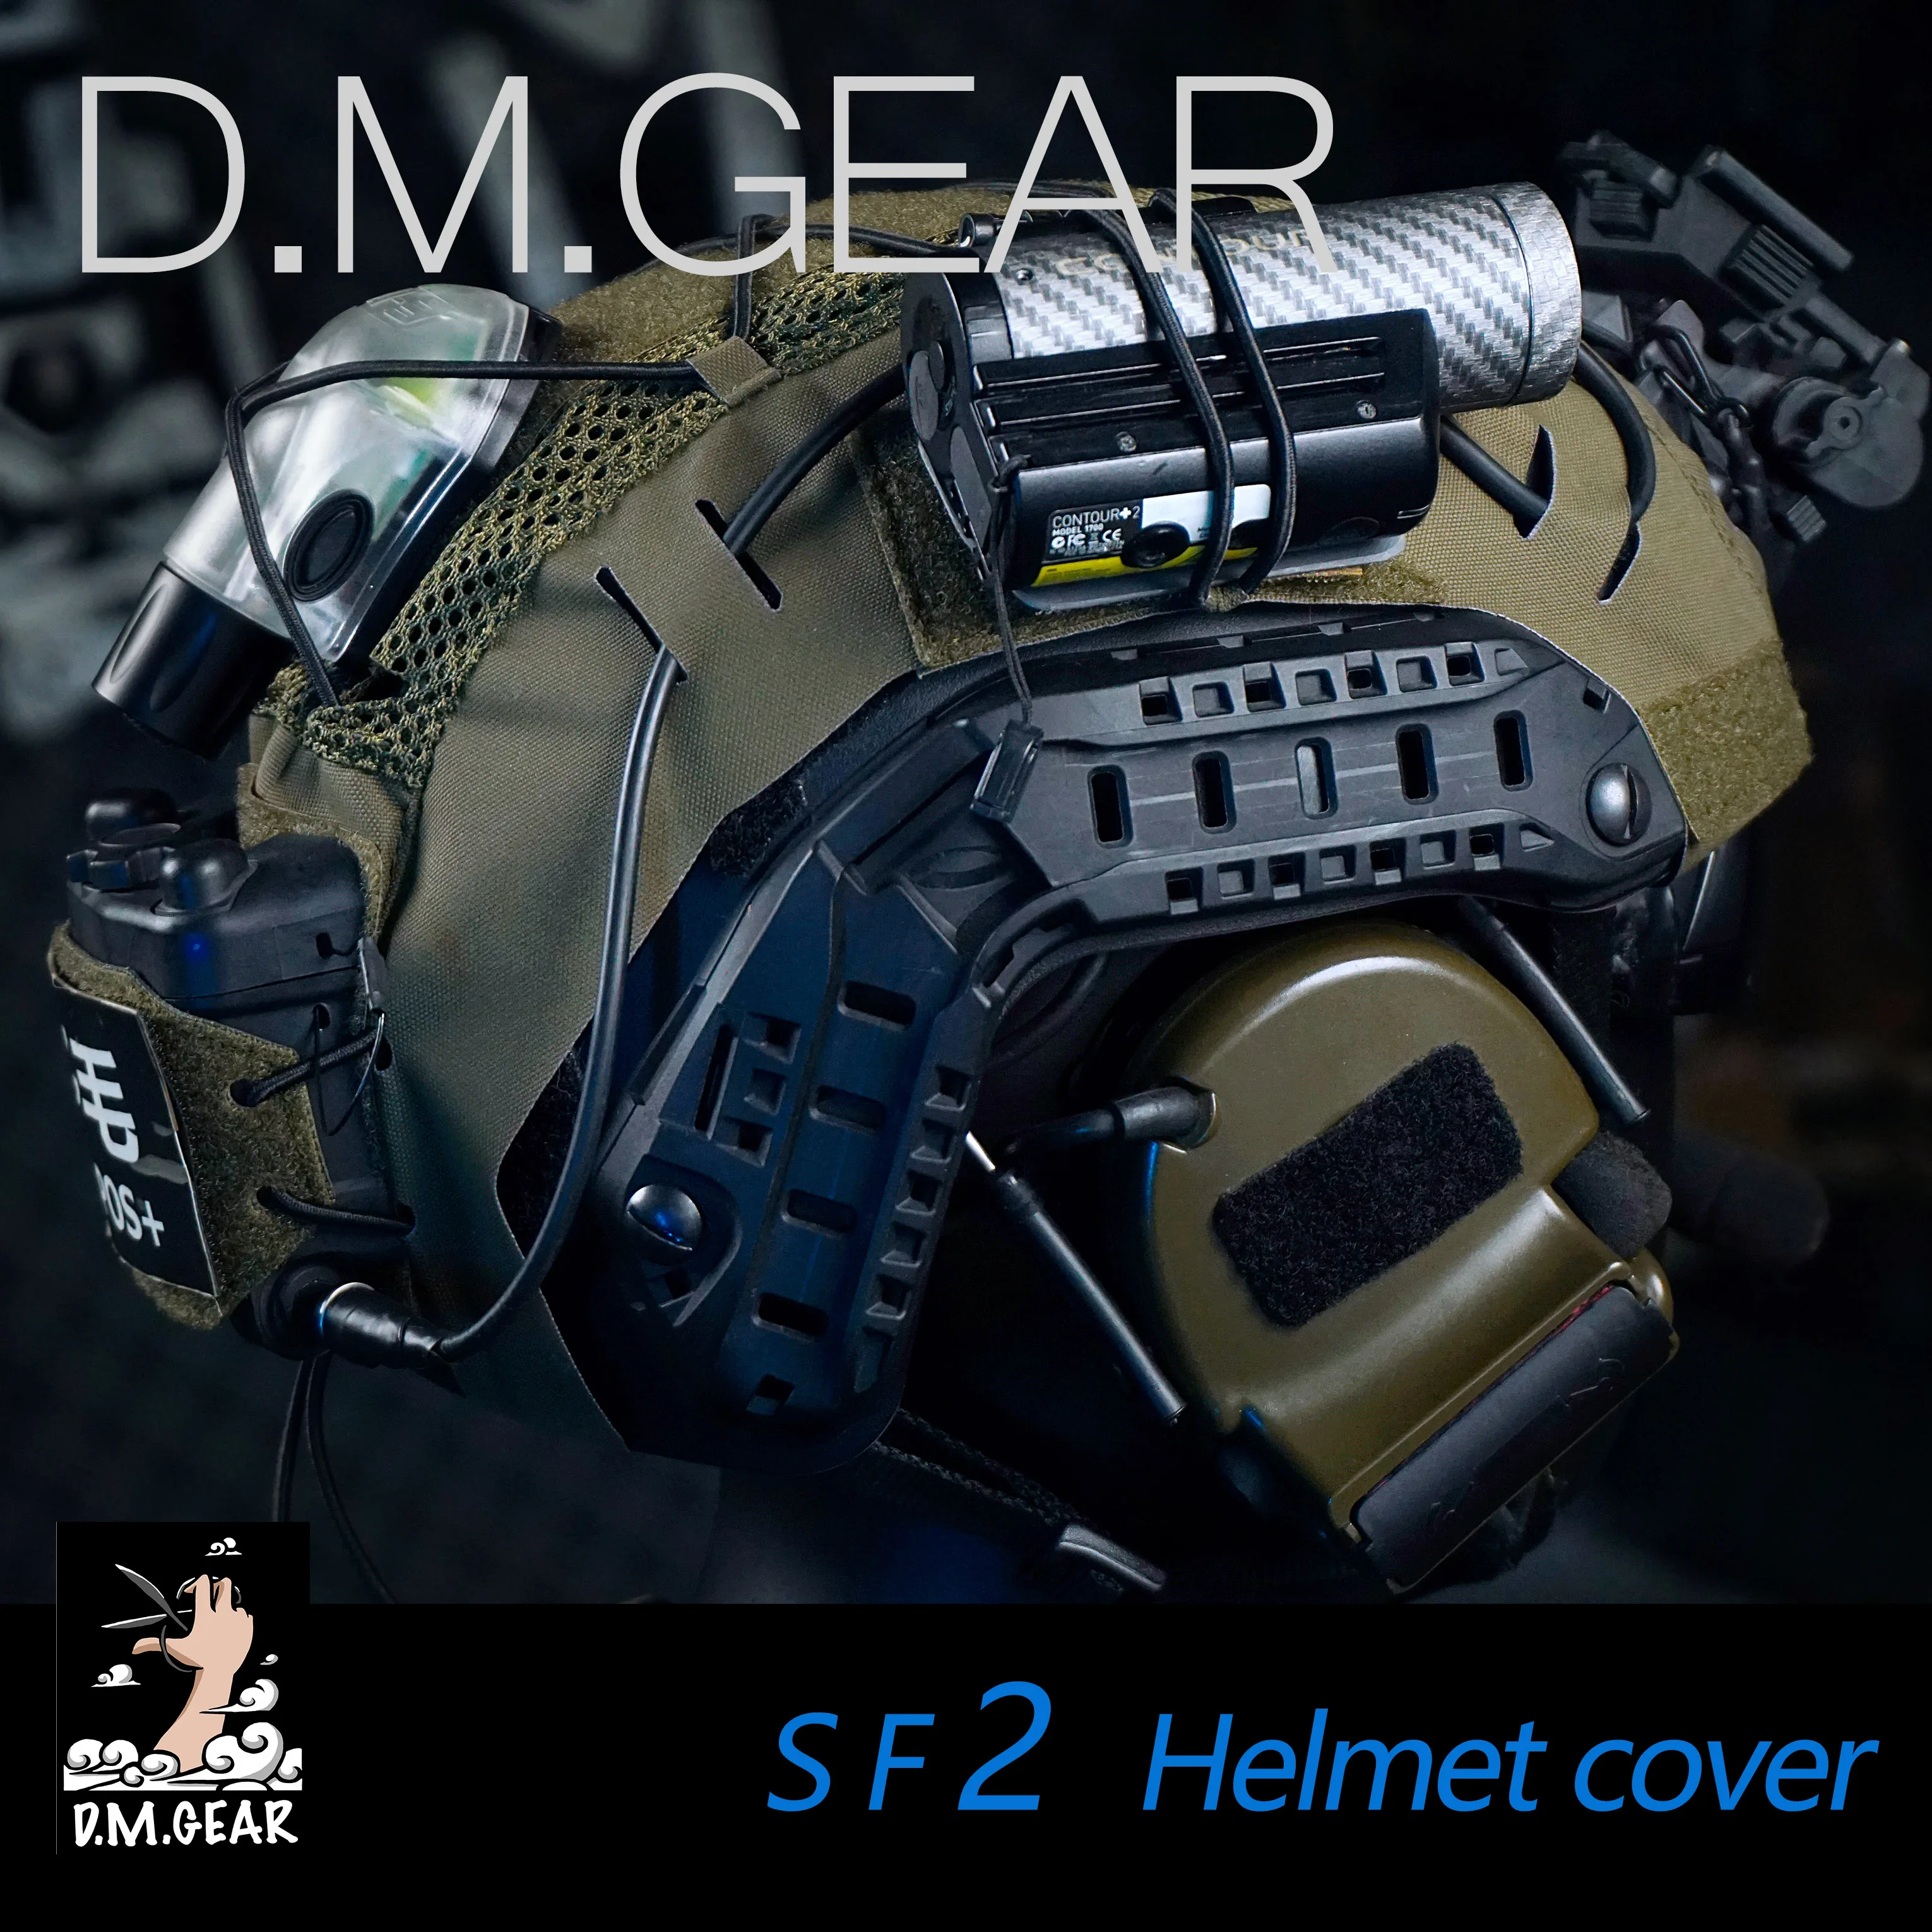 

DMGear Maritime Helmet Cover Fma Tmc Sf2 Tactical Helmet Protective Gear Military Airsoft Equipment Multicam Ranger Green Fast